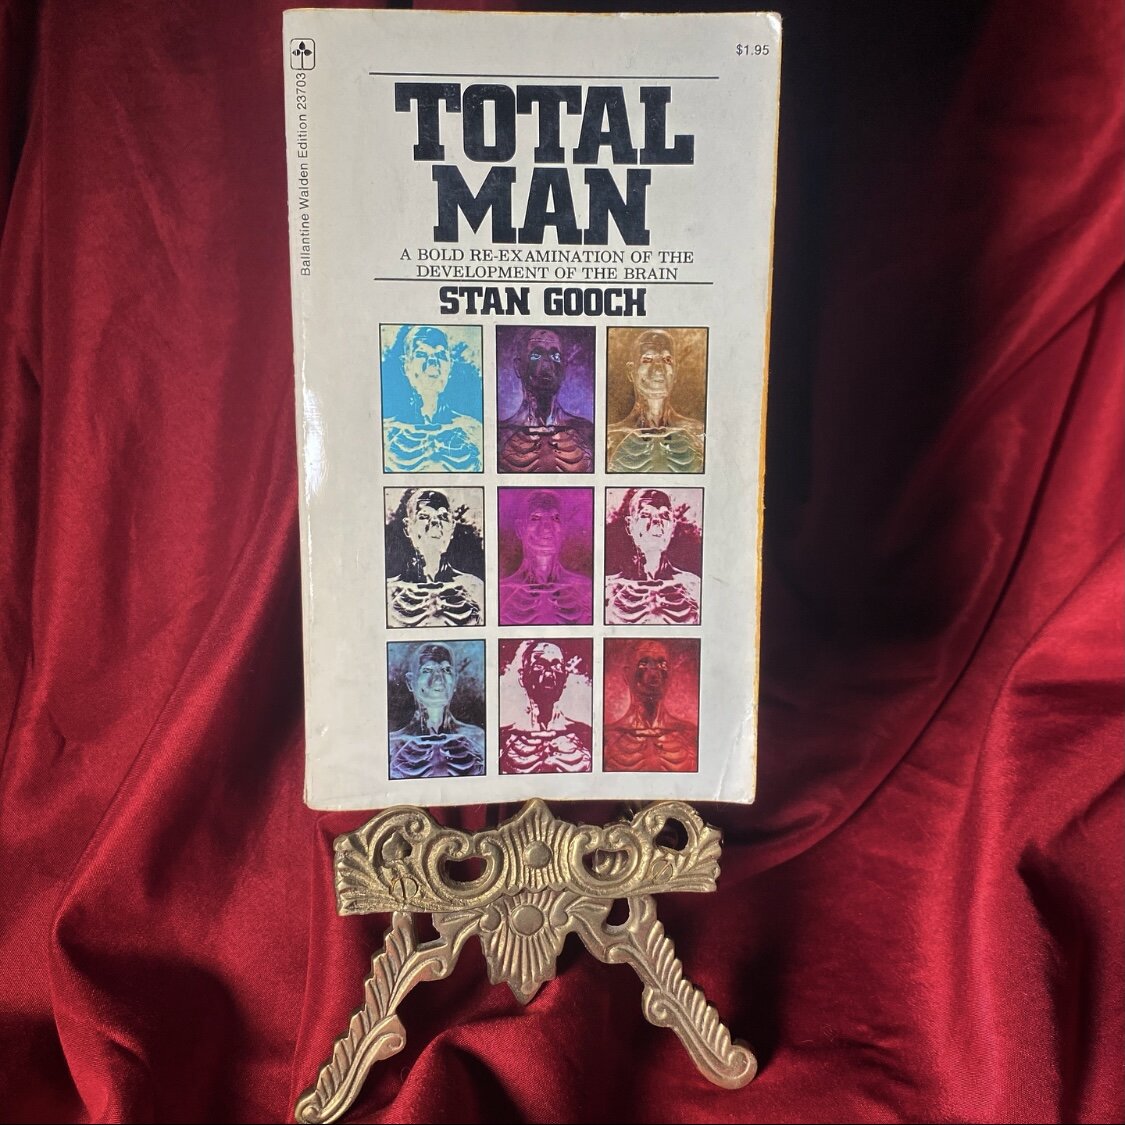 Total Man by Stan Gooch